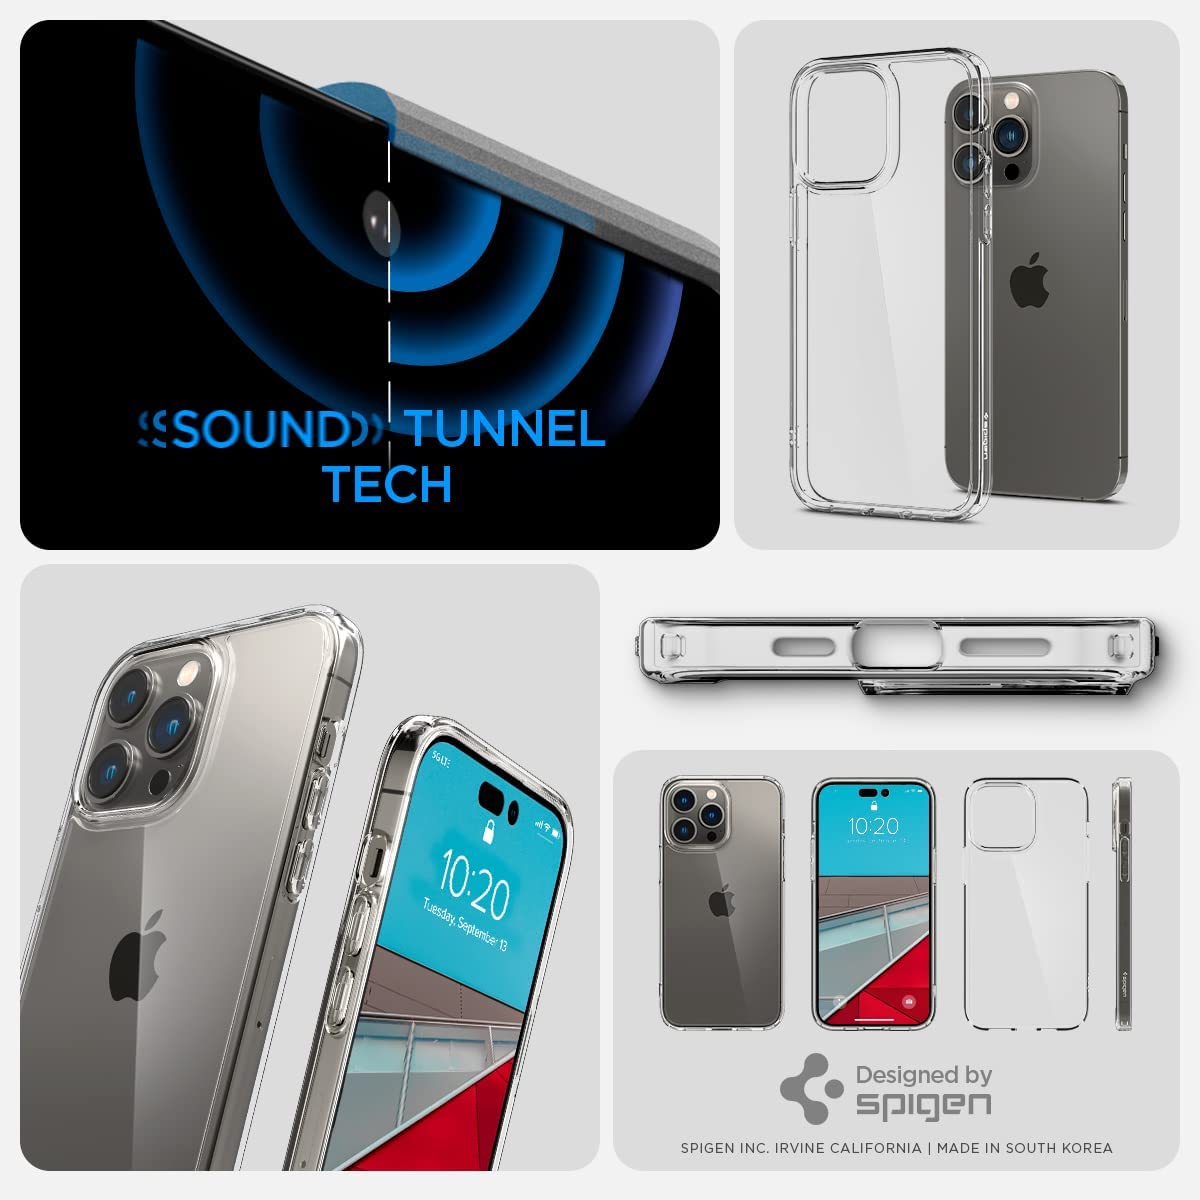 Spigen Ultra Hybrid Case For iPhone 11 - Crystal Clear